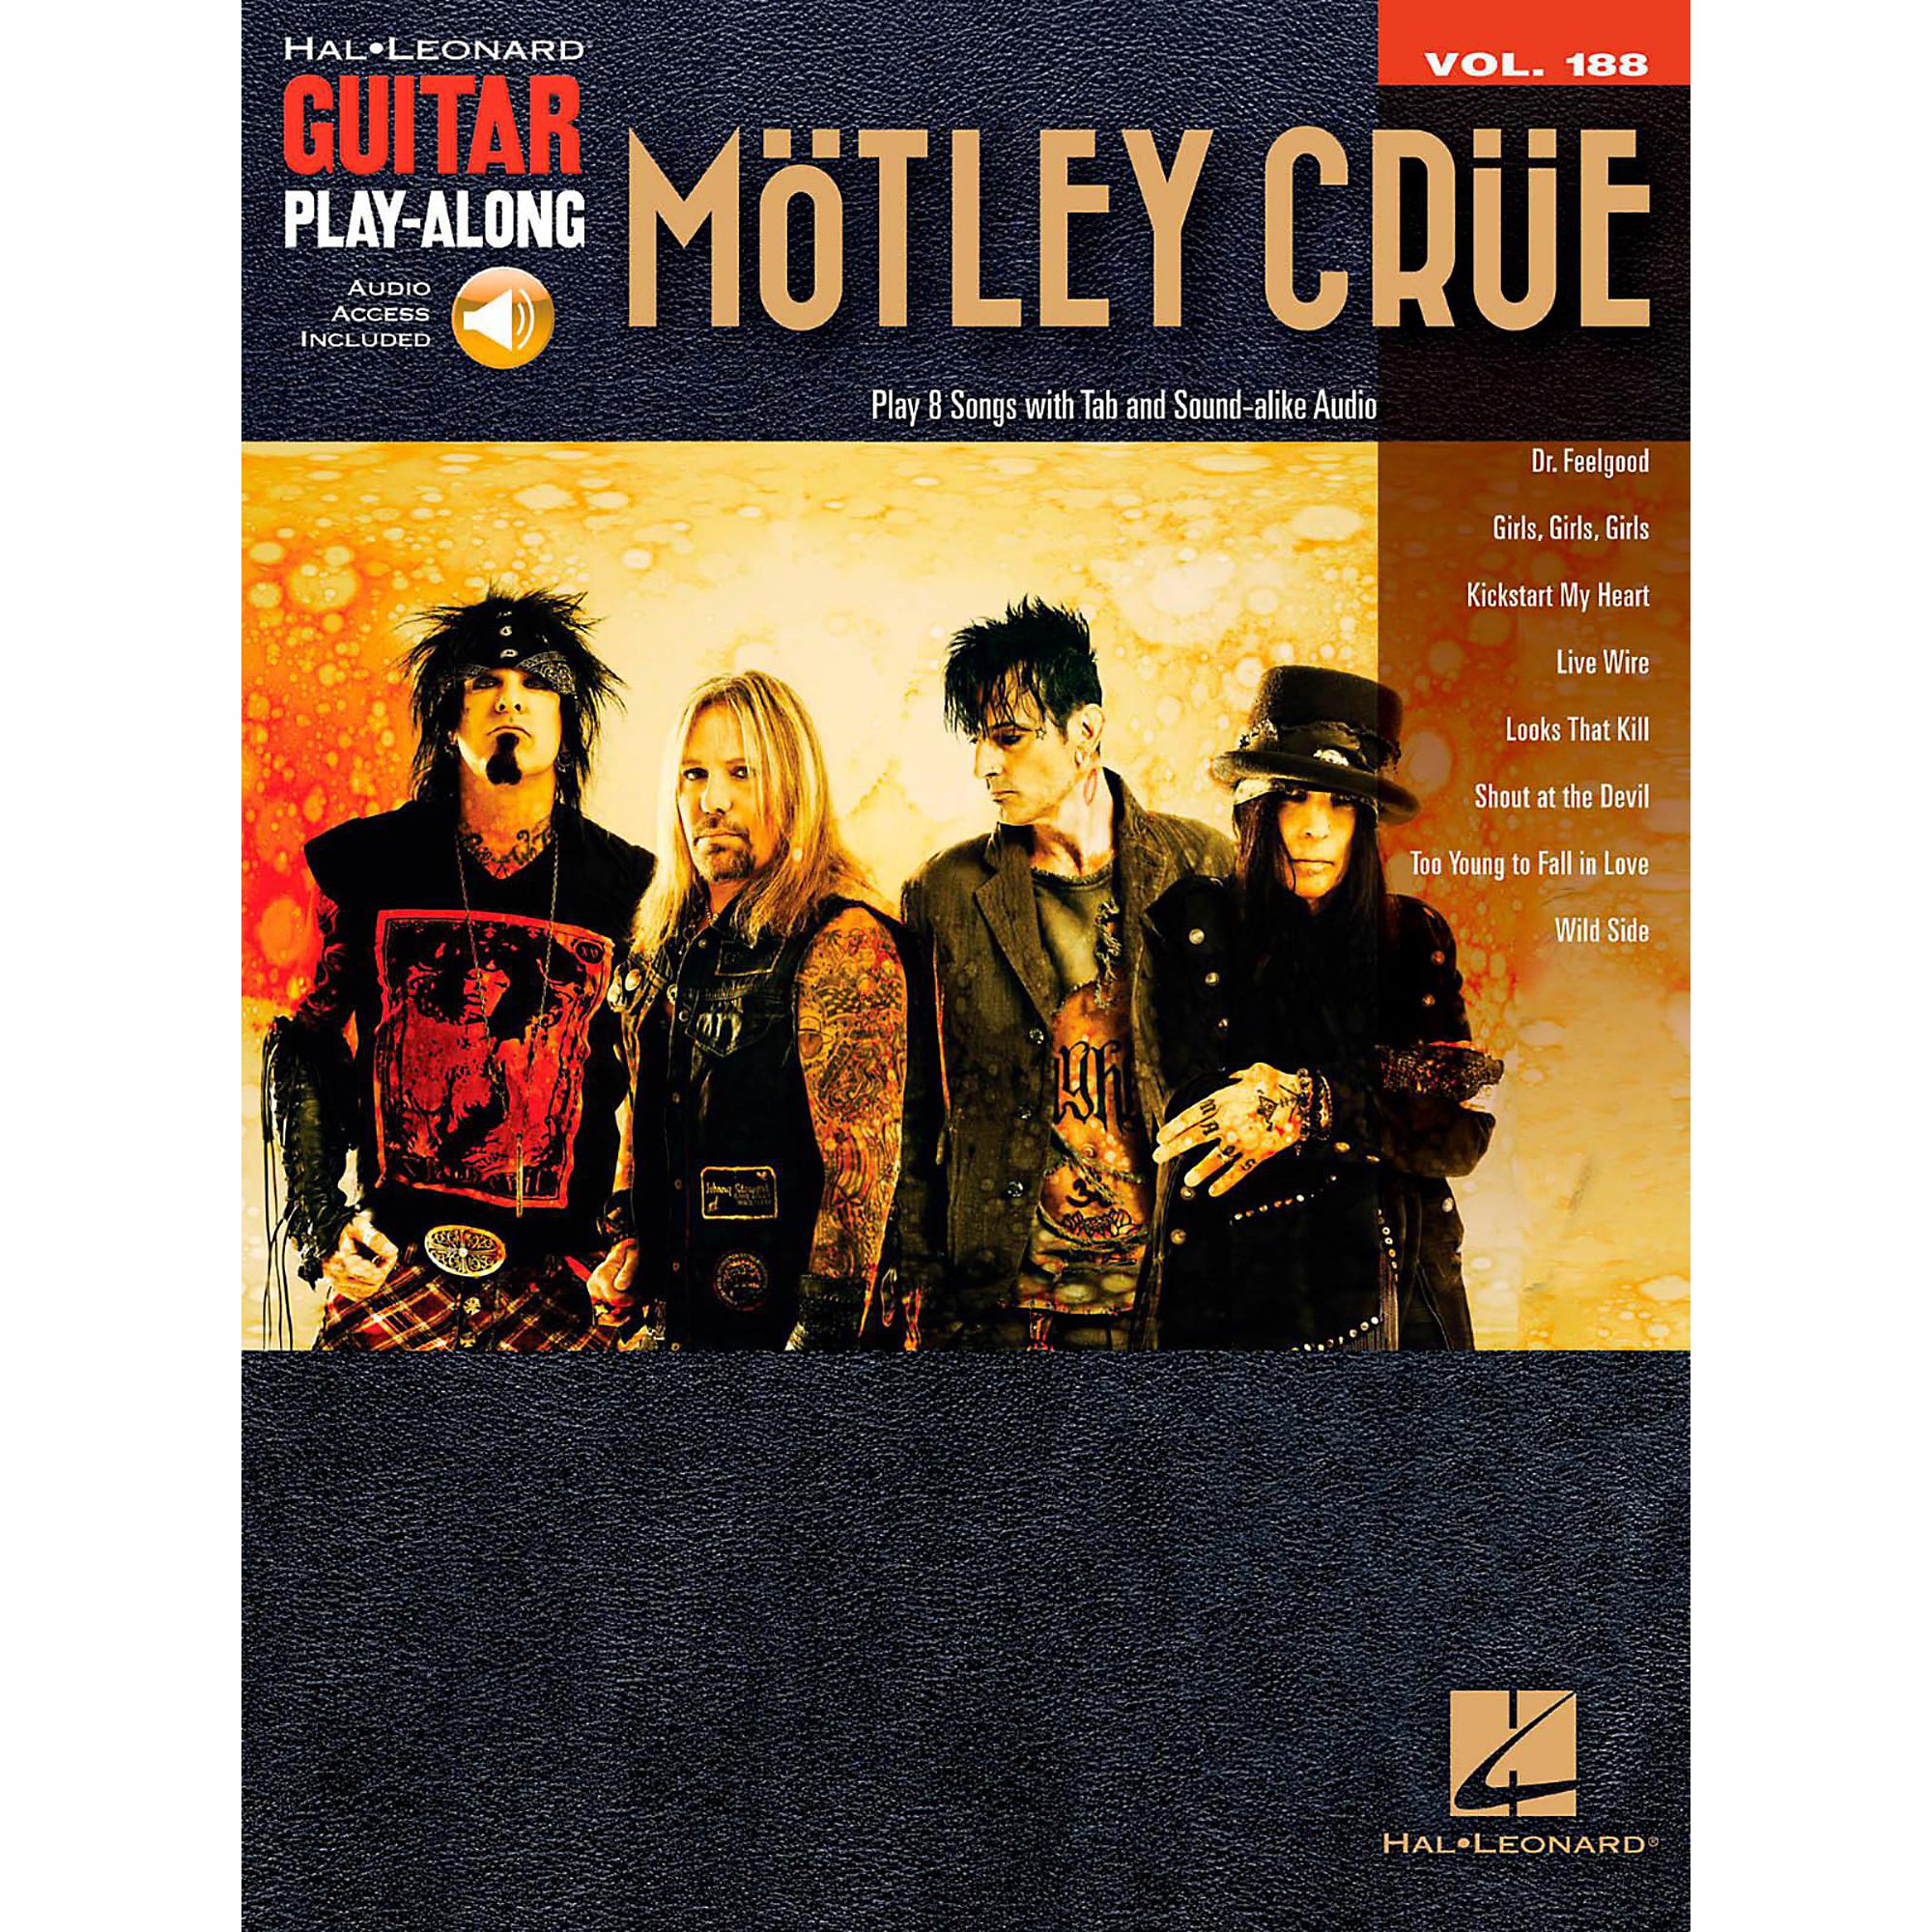 Live Wire by Motley Crue - Electric Guitar - Digital Sheet Music